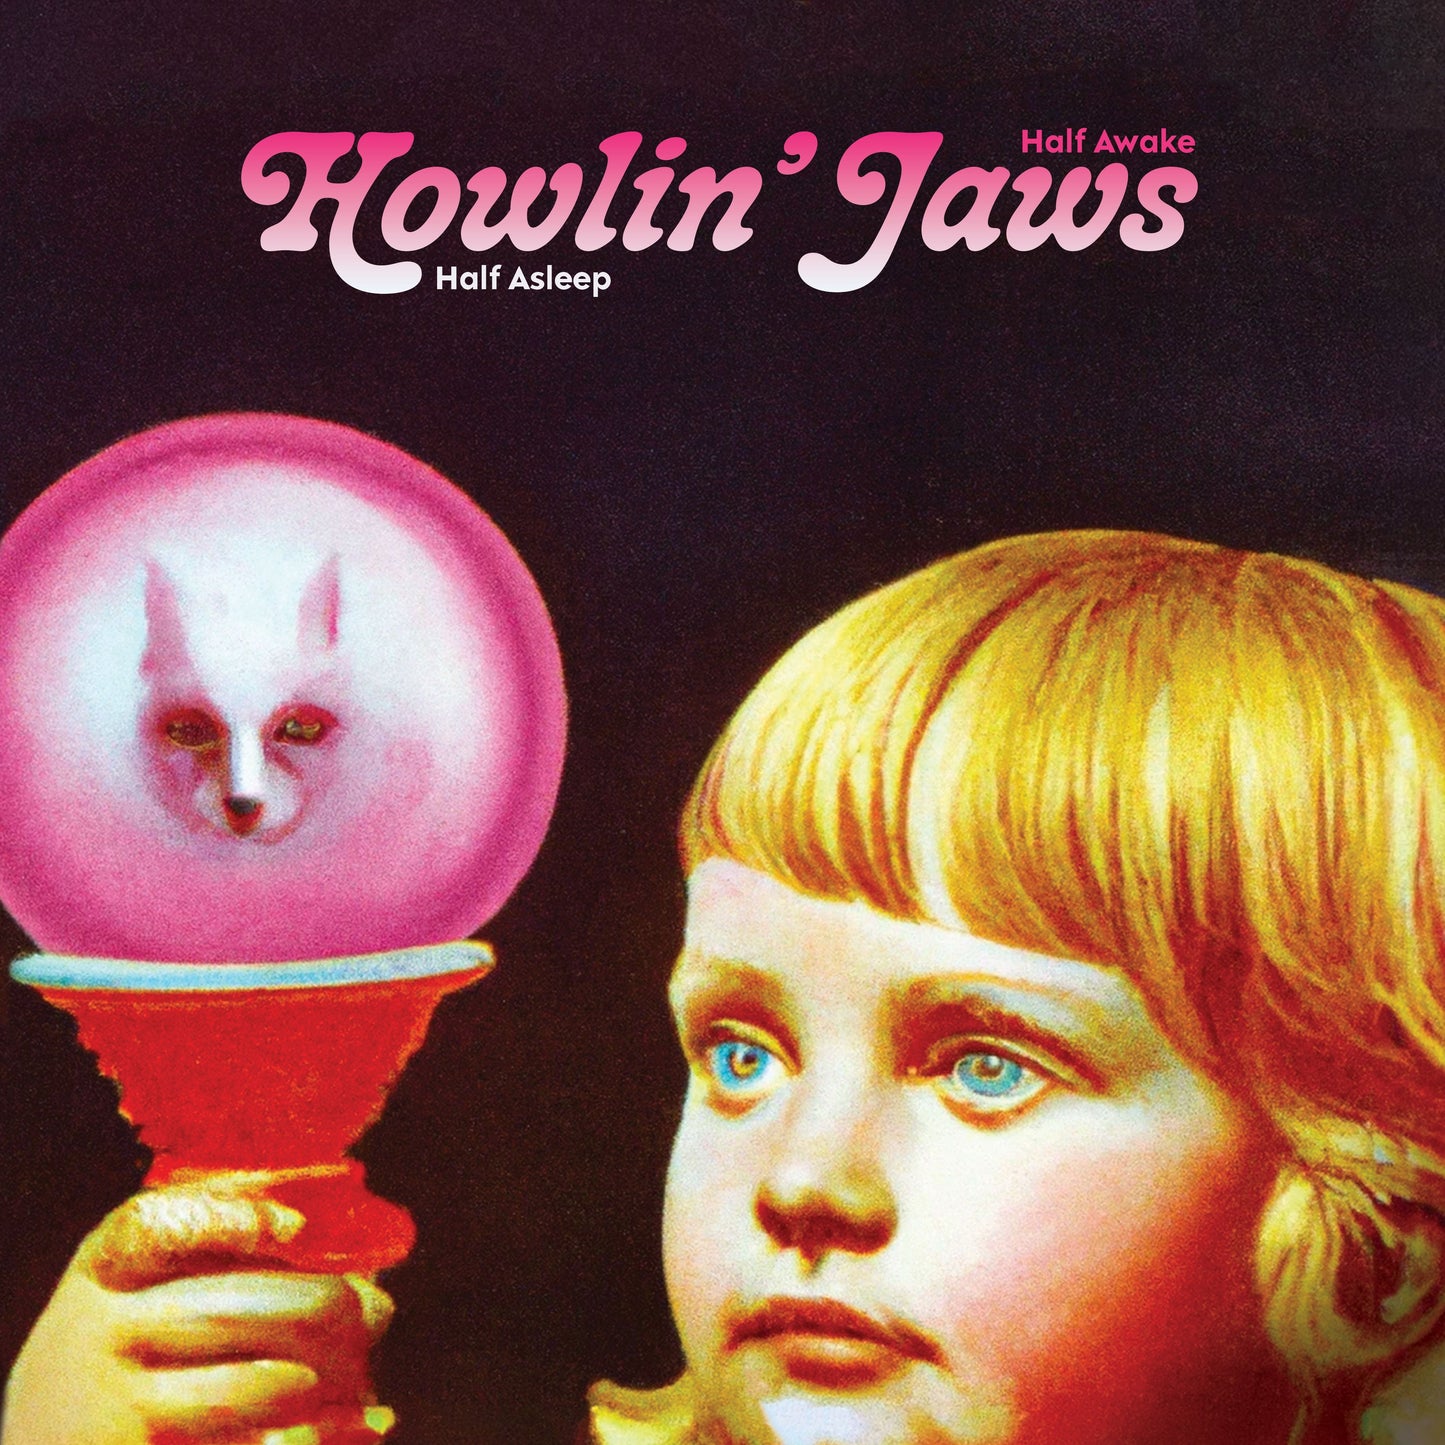 COMMANDE CD  « HALF ASLEEP HALF AWAKE »,  nouvel album de Howlin' Jaws